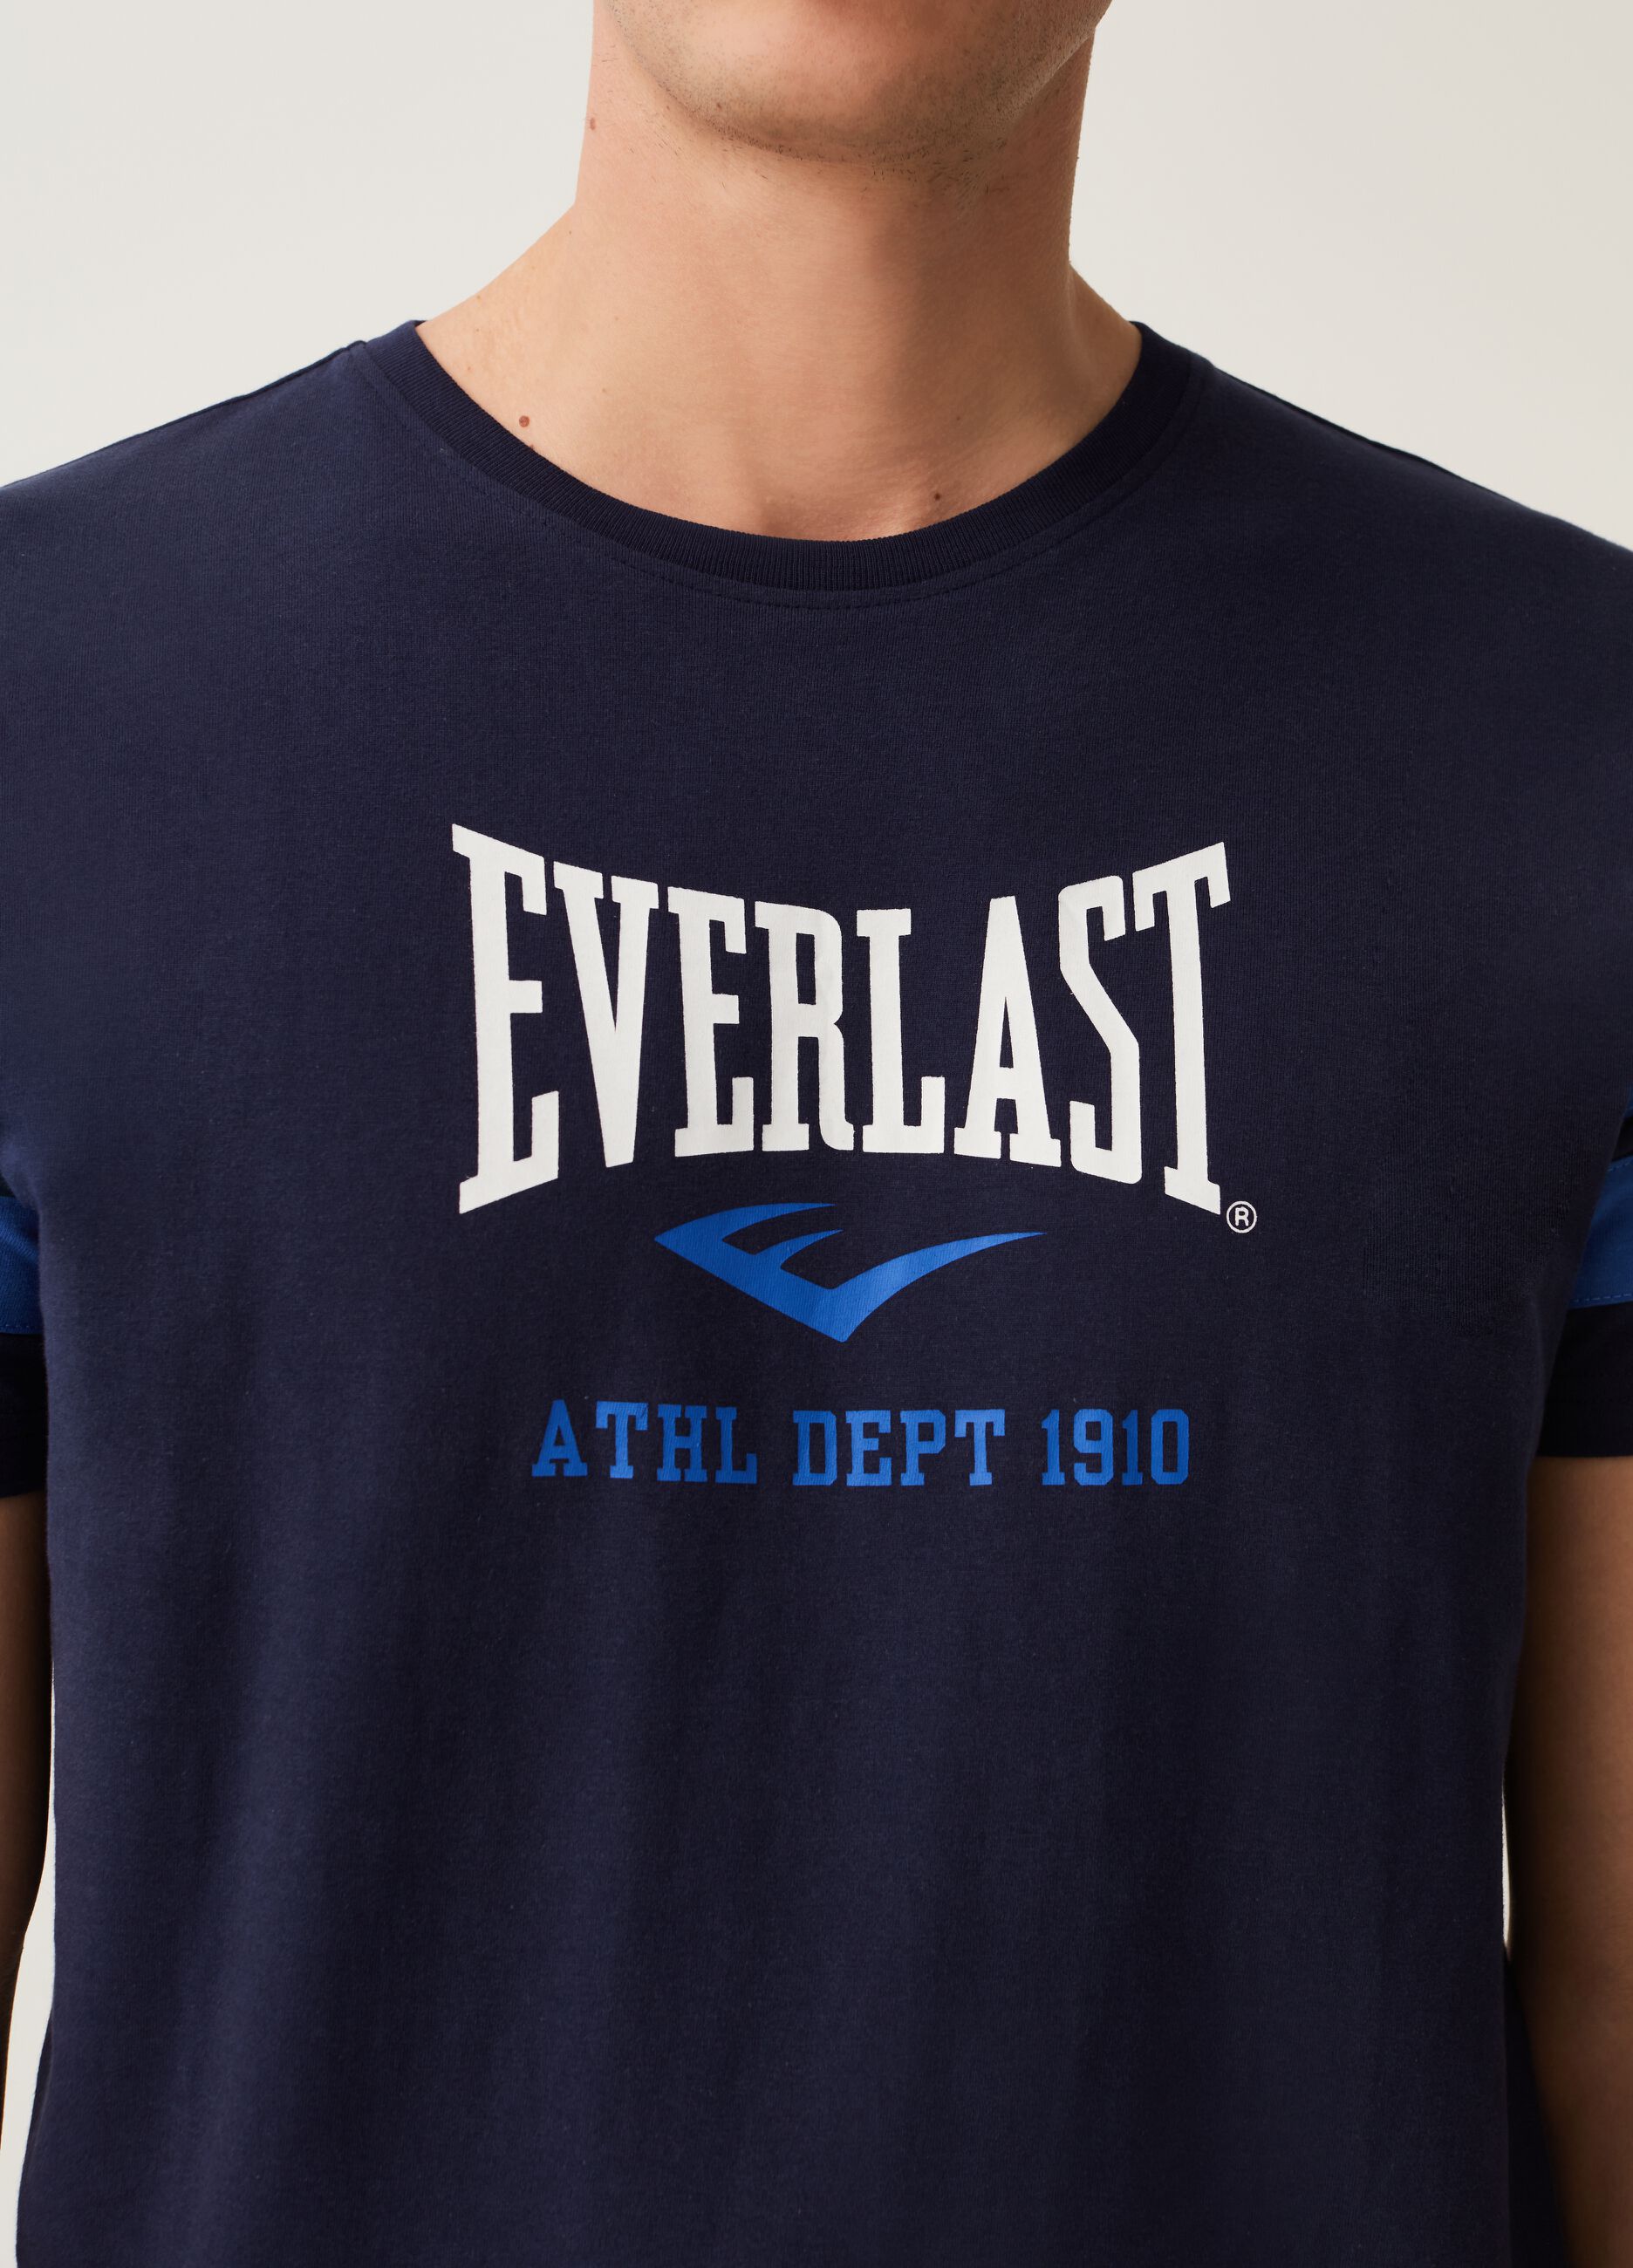 Camiseta con logo Everlast estampado